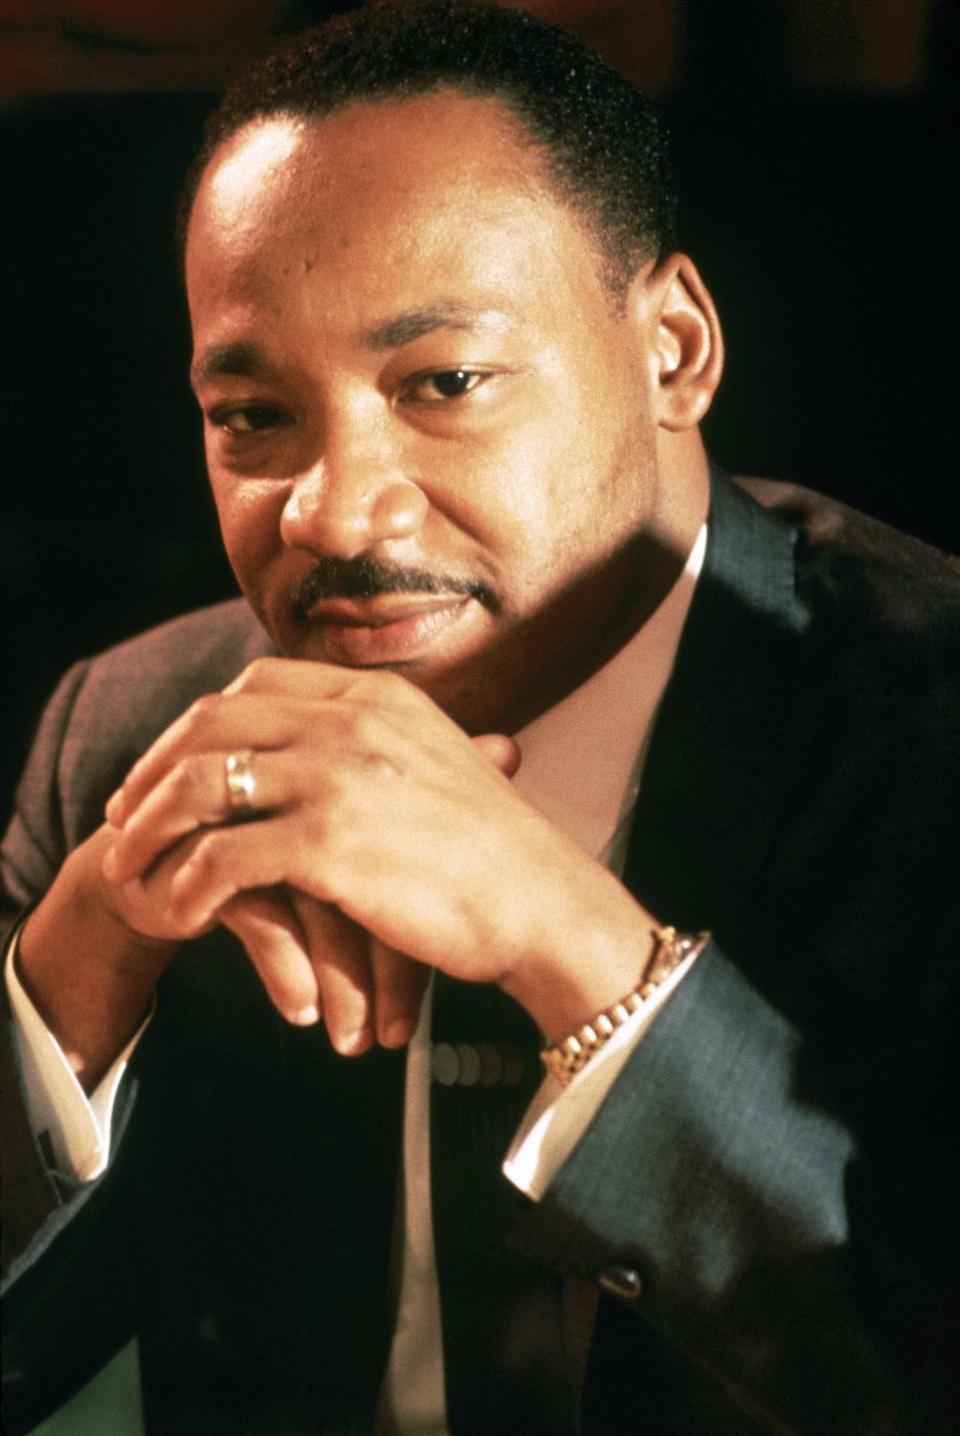 10) Dr. Martin Luther King Jr.